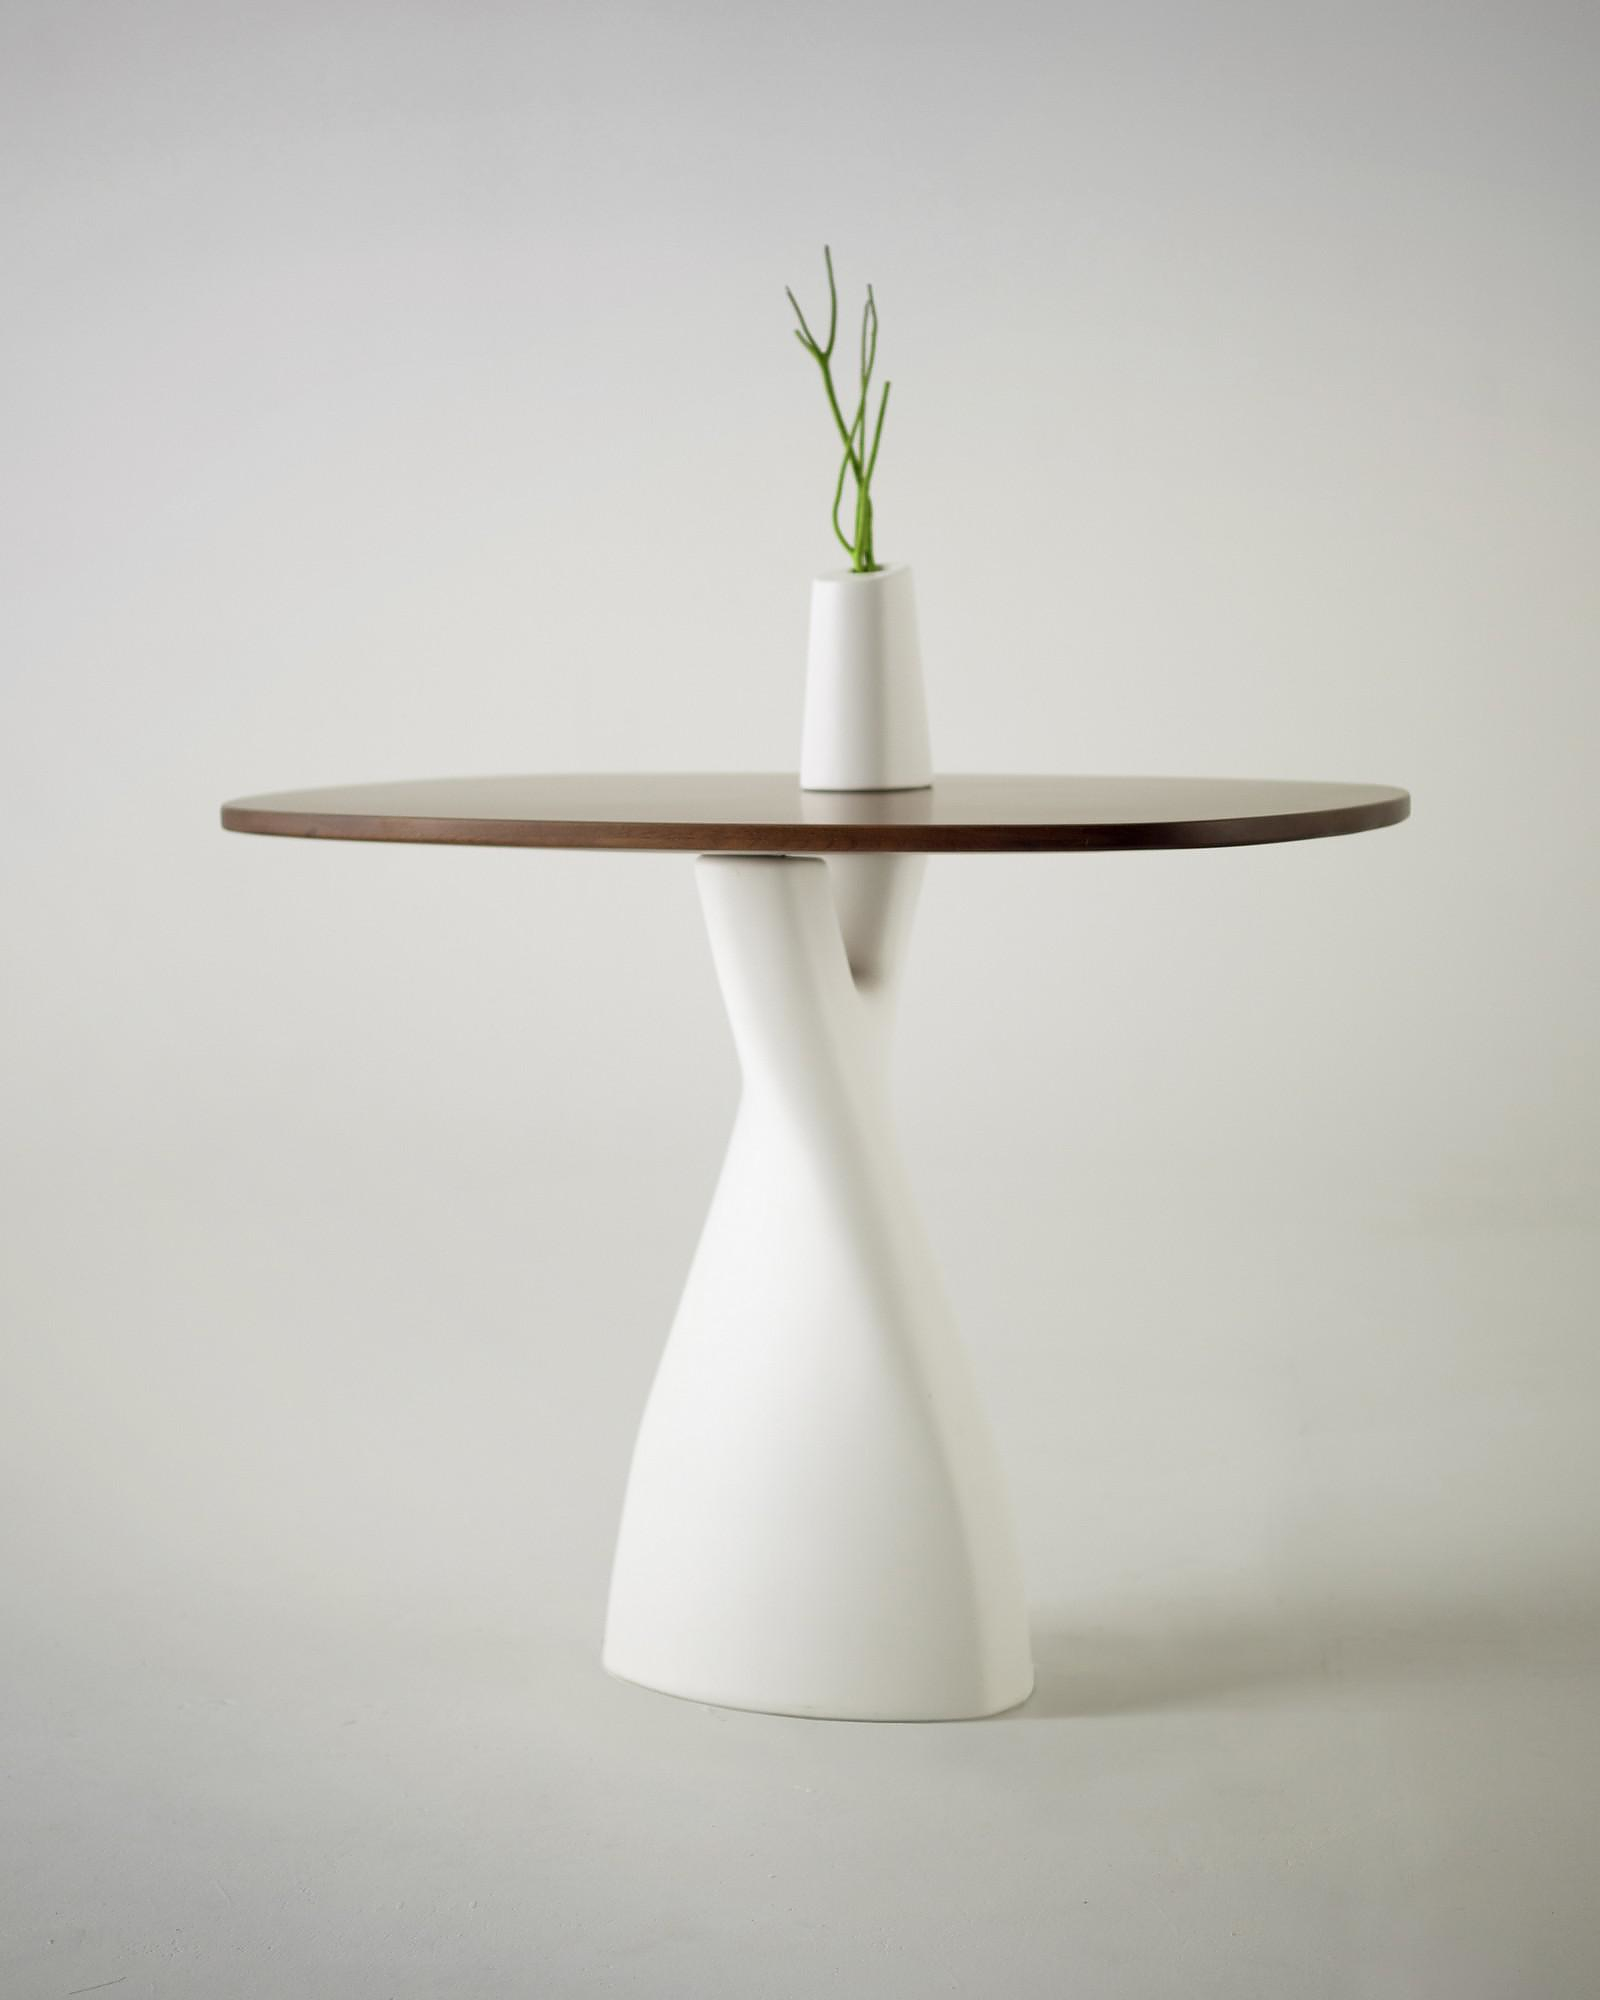 Treeangle a table/vase fusion by Anna Strupinskaya.